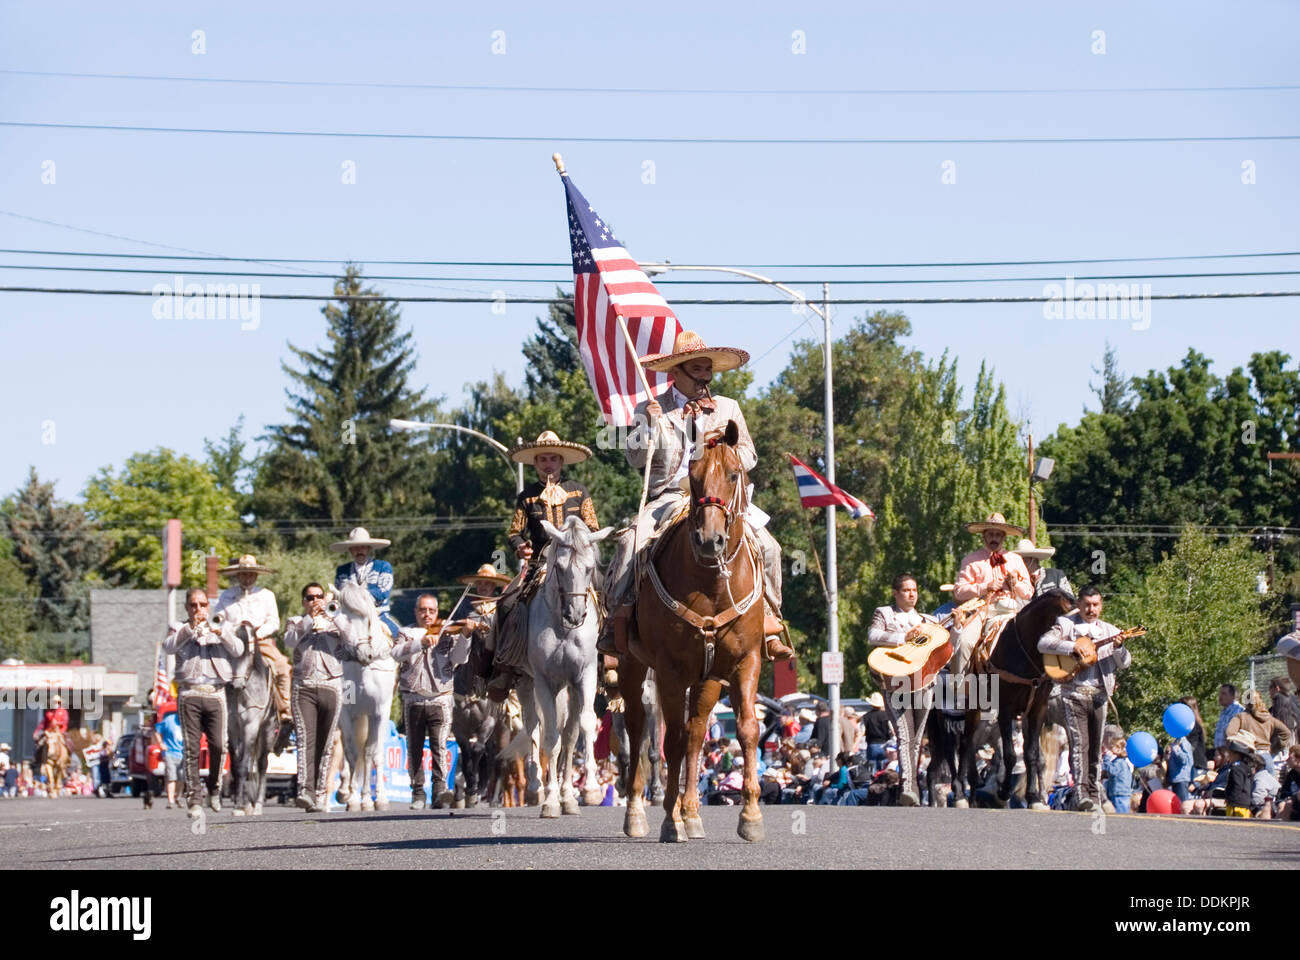 Horse riding band leader of a Mexican mariachi band parading Pearl Street, Ellensburg Rodeo Western Parade, WA, USA Stock Photo